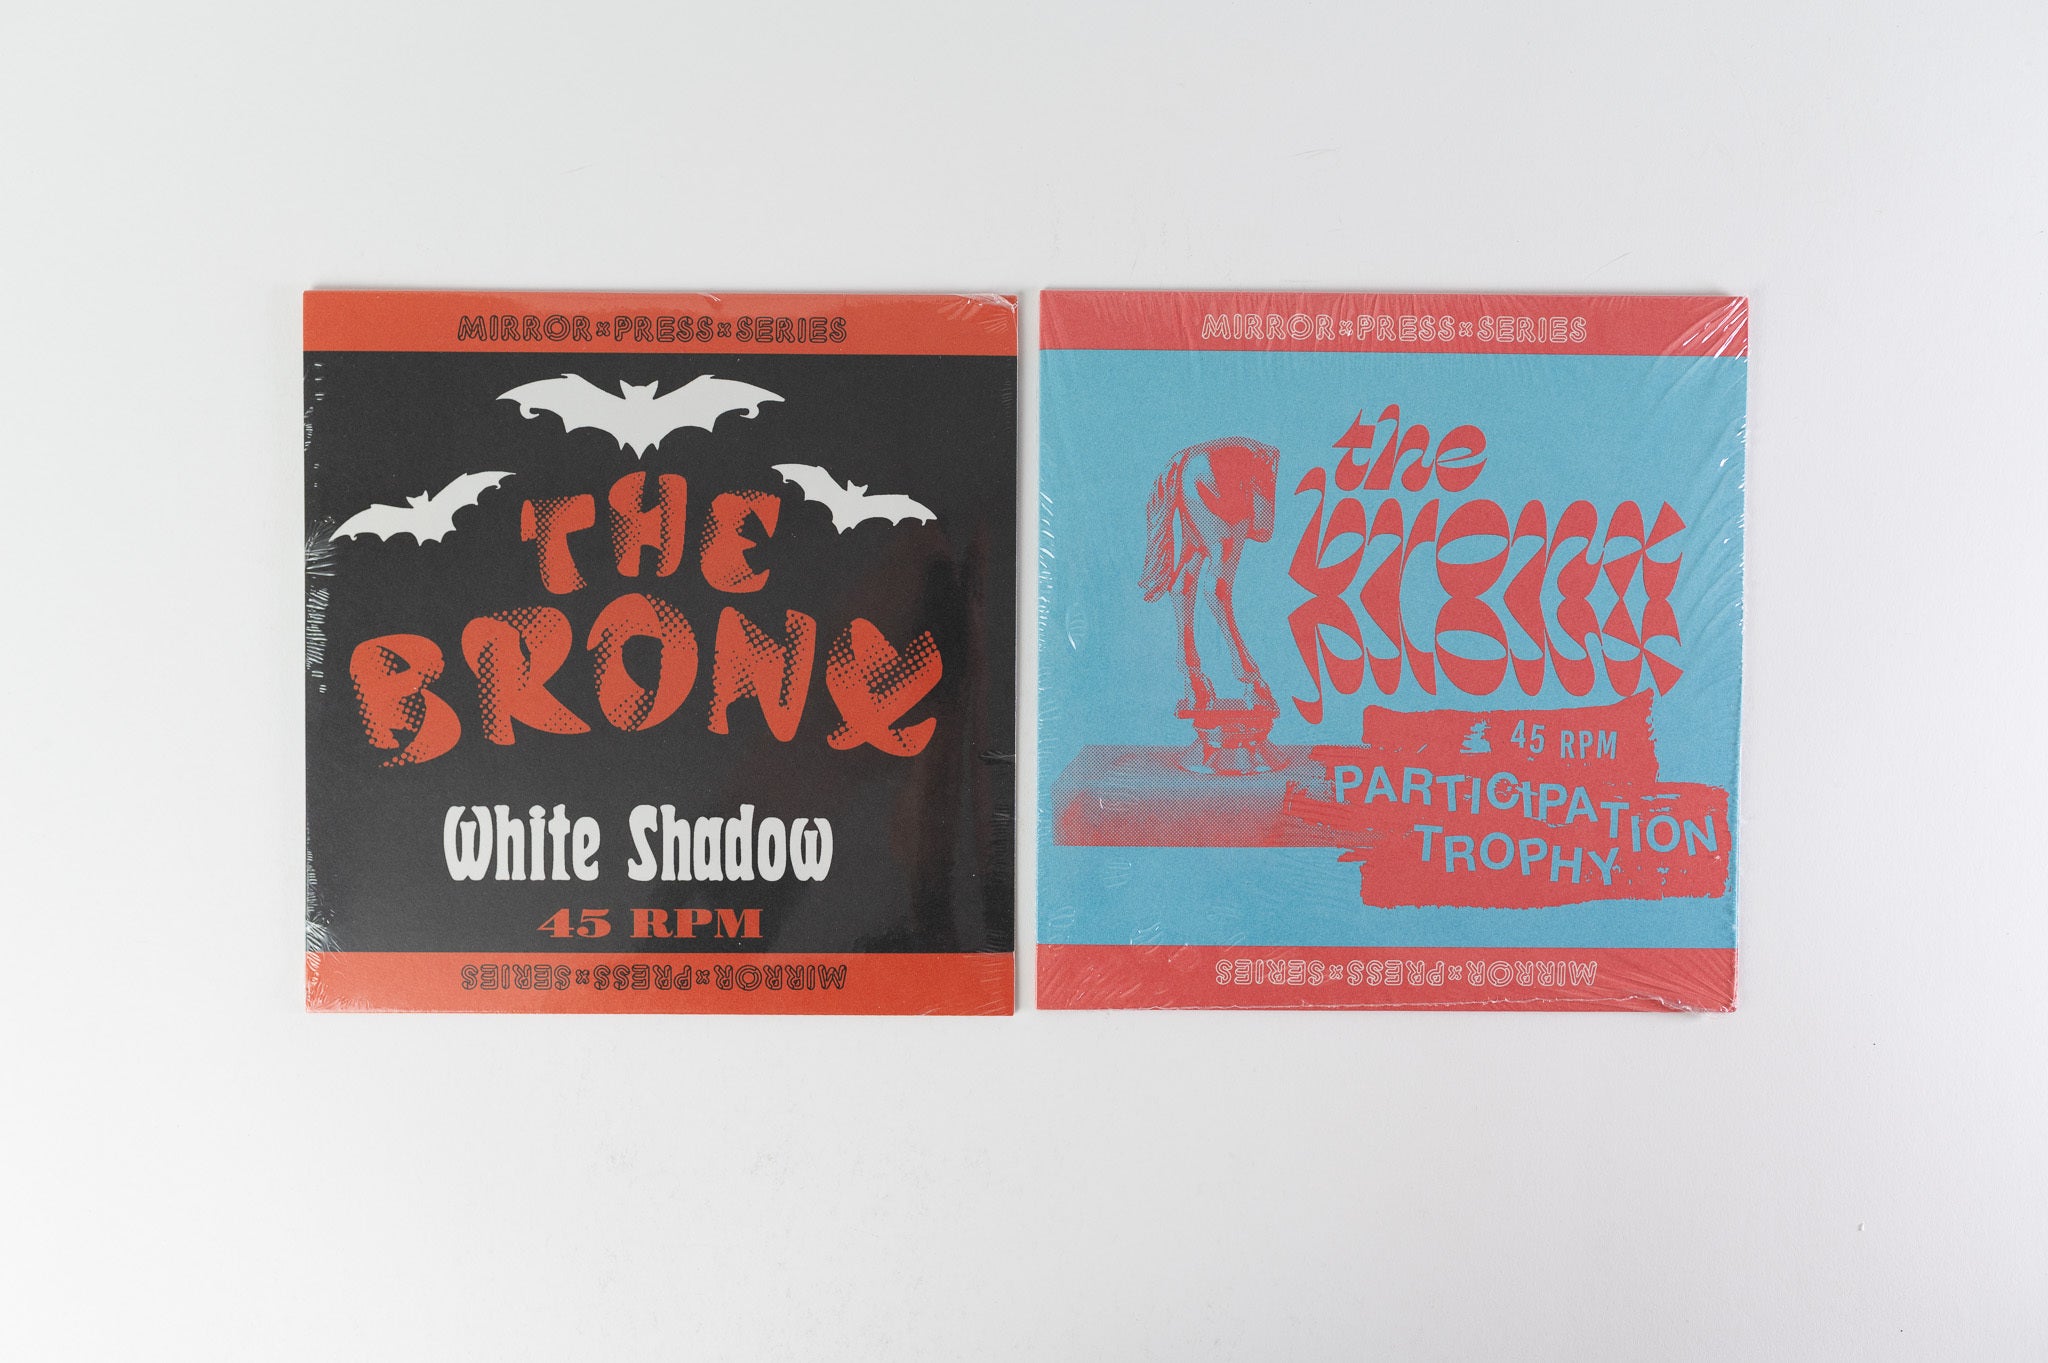 The Bronx - The Bronx on Cooking Vinyl White Drugs Ltd Edition Wooden 7" Box Set